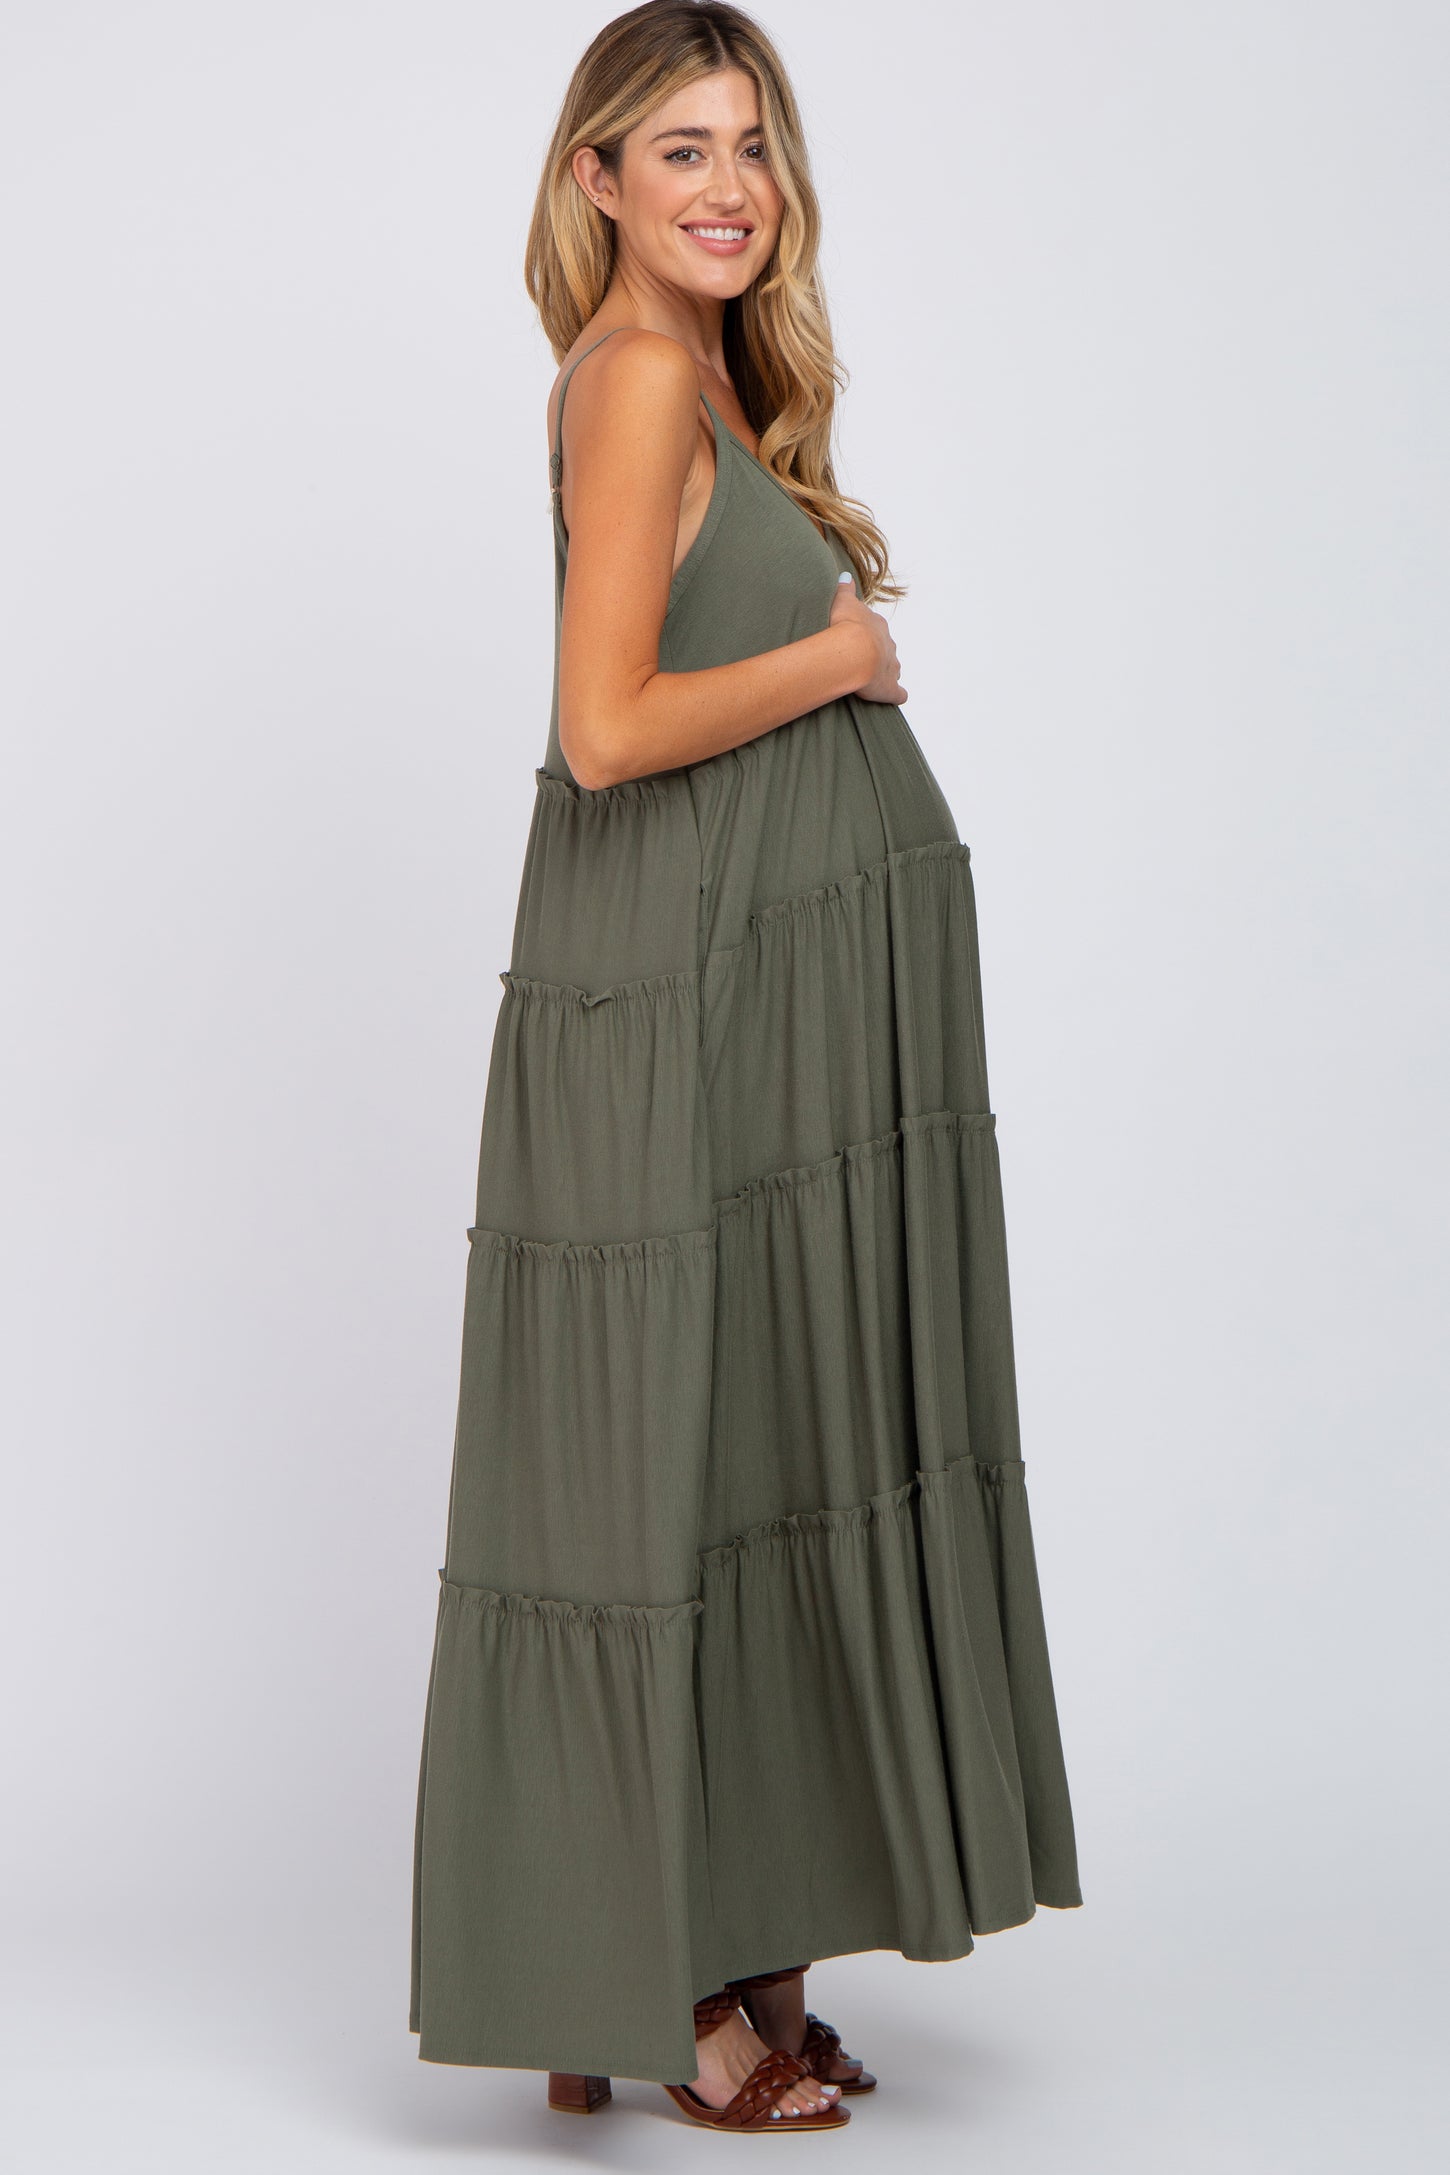 Olive Sleeveless Tiered Maternity Maxi Dress